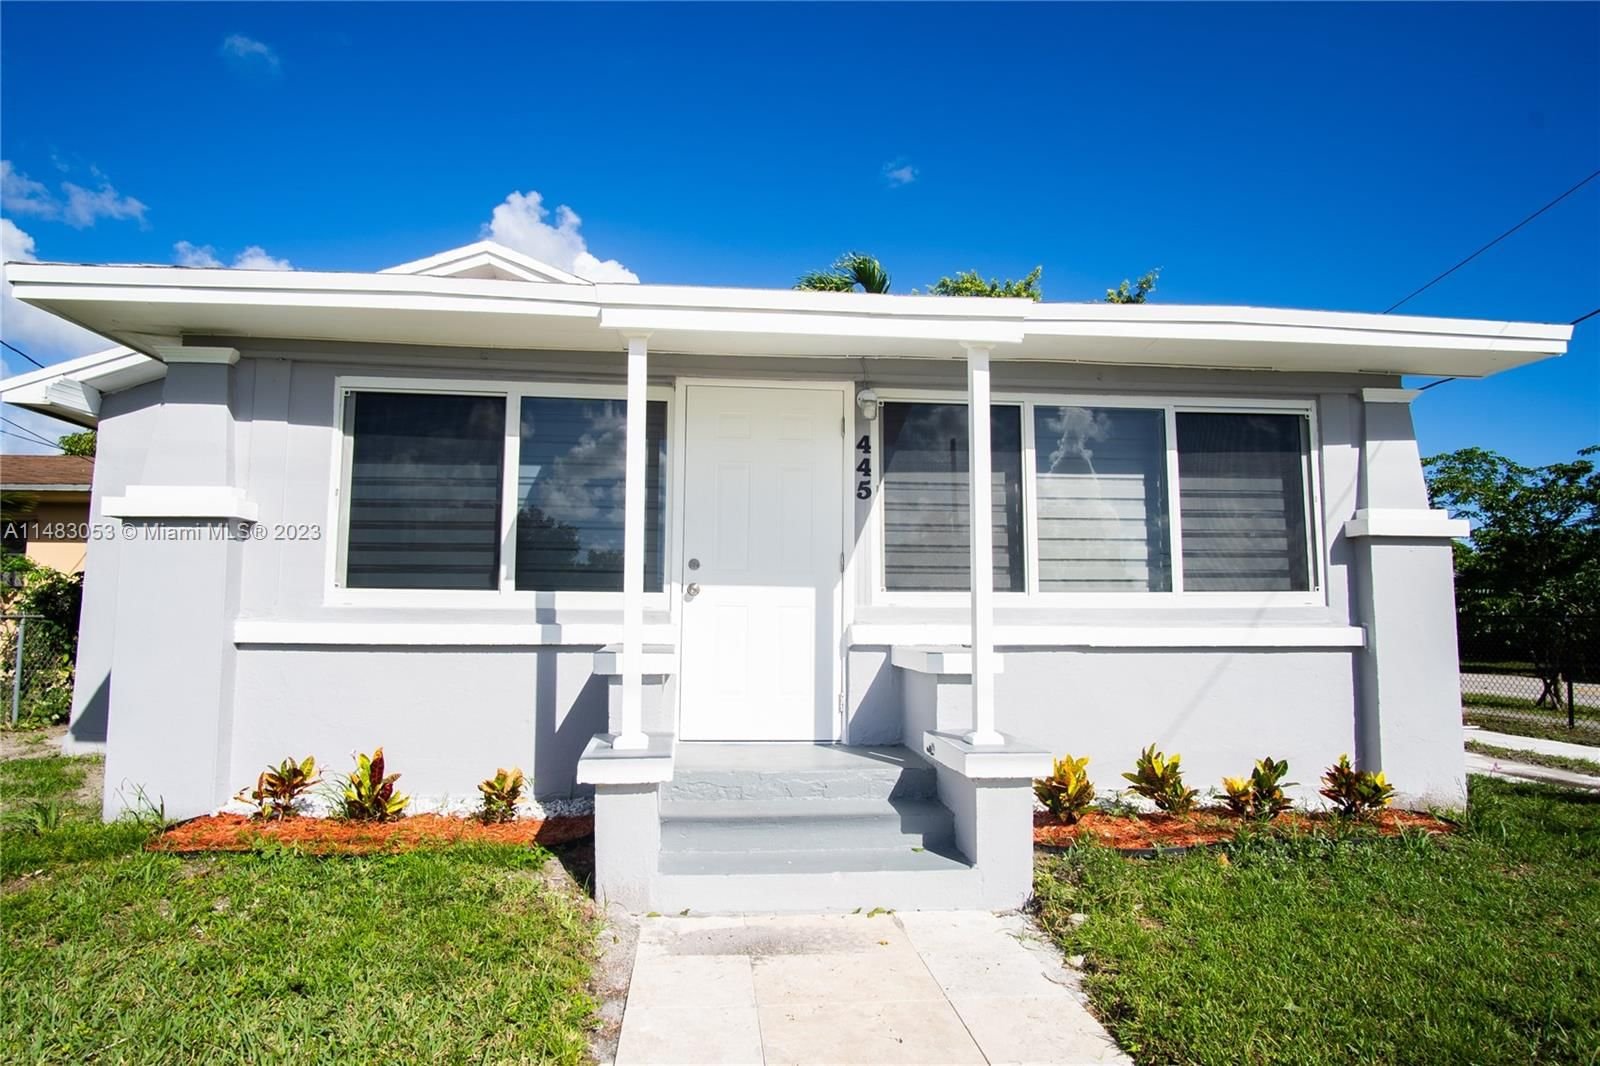 Real estate property located at 445 171 ST, Miami-Dade County, SEABOARD PARK, North Miami Beach, FL